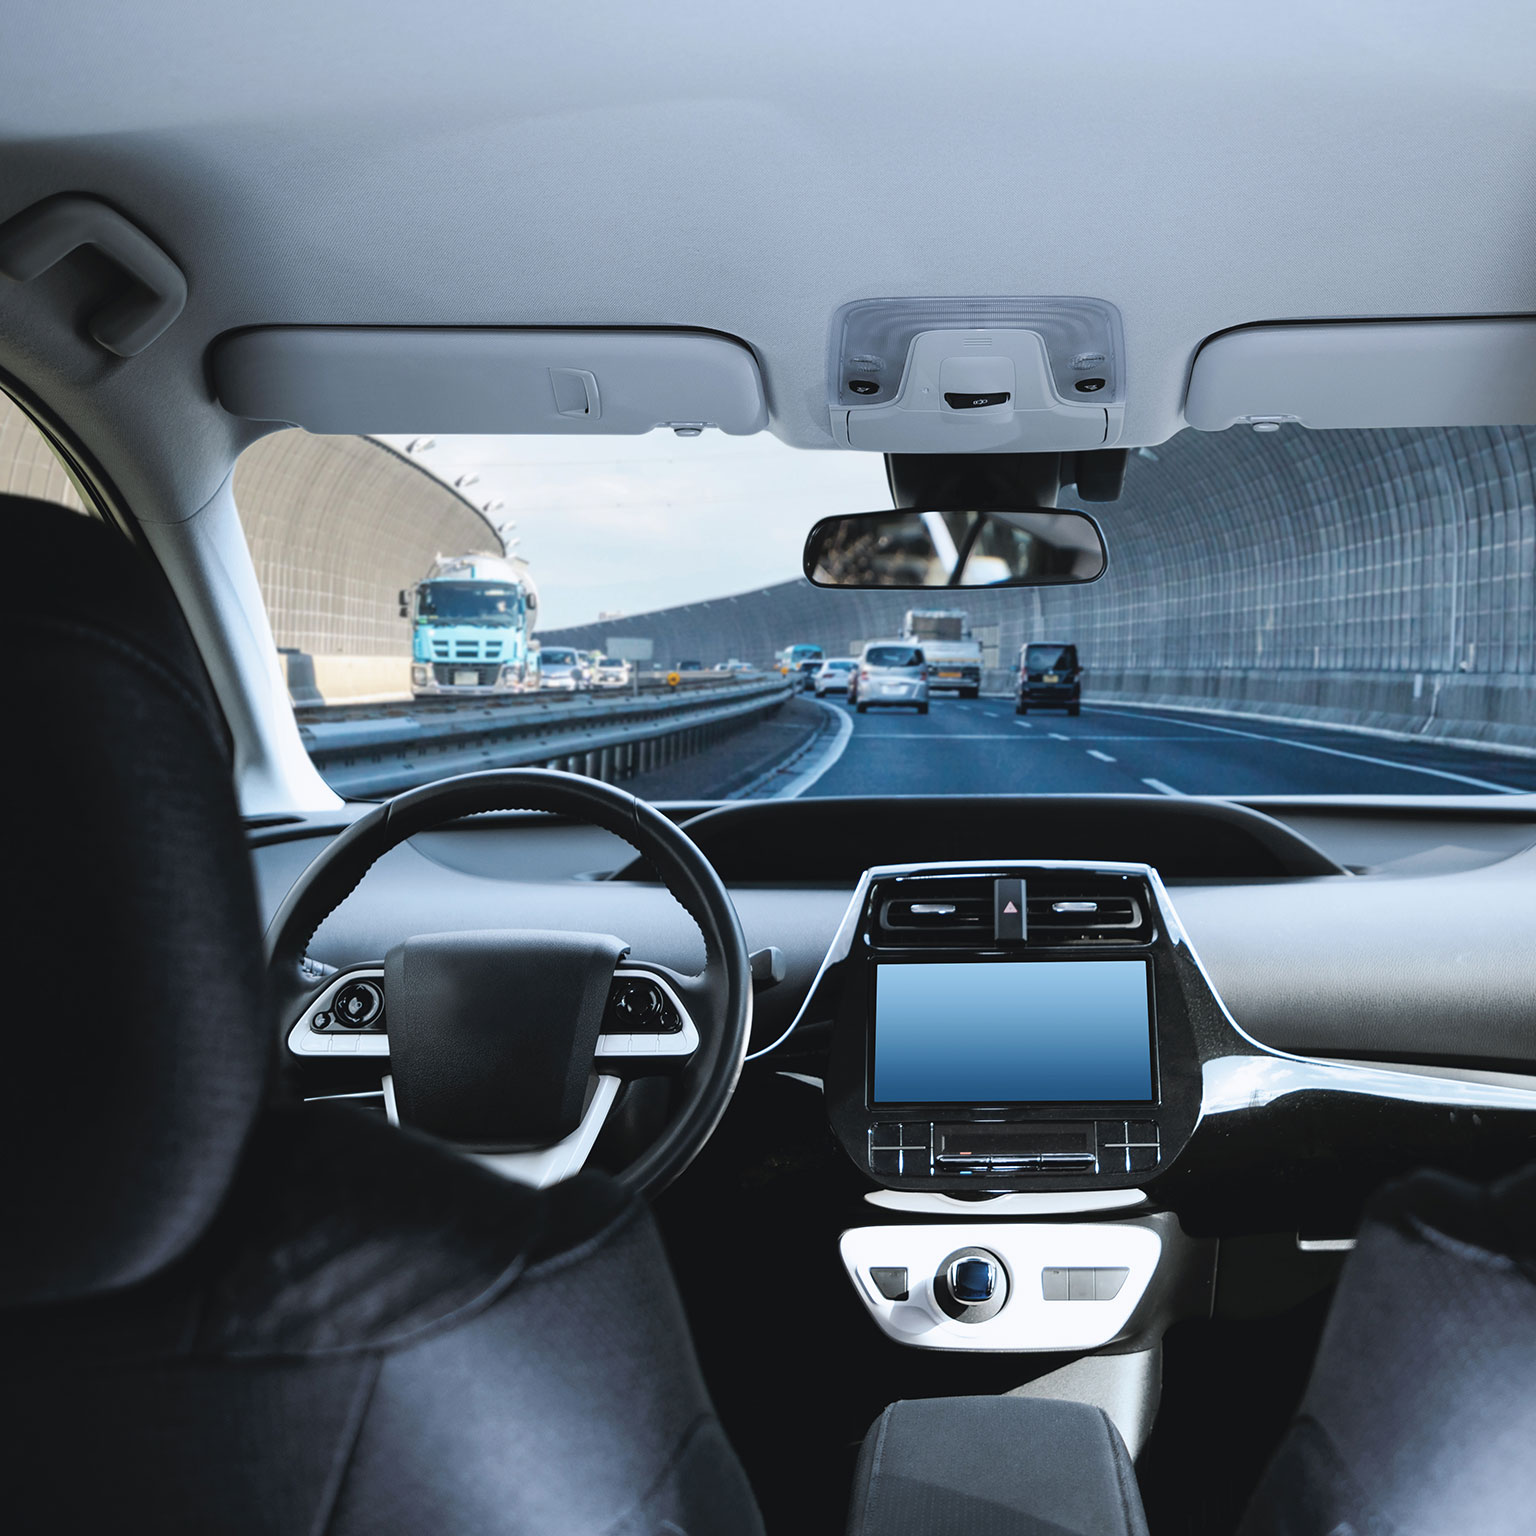 The future of auto insurance: Autonomous mobility